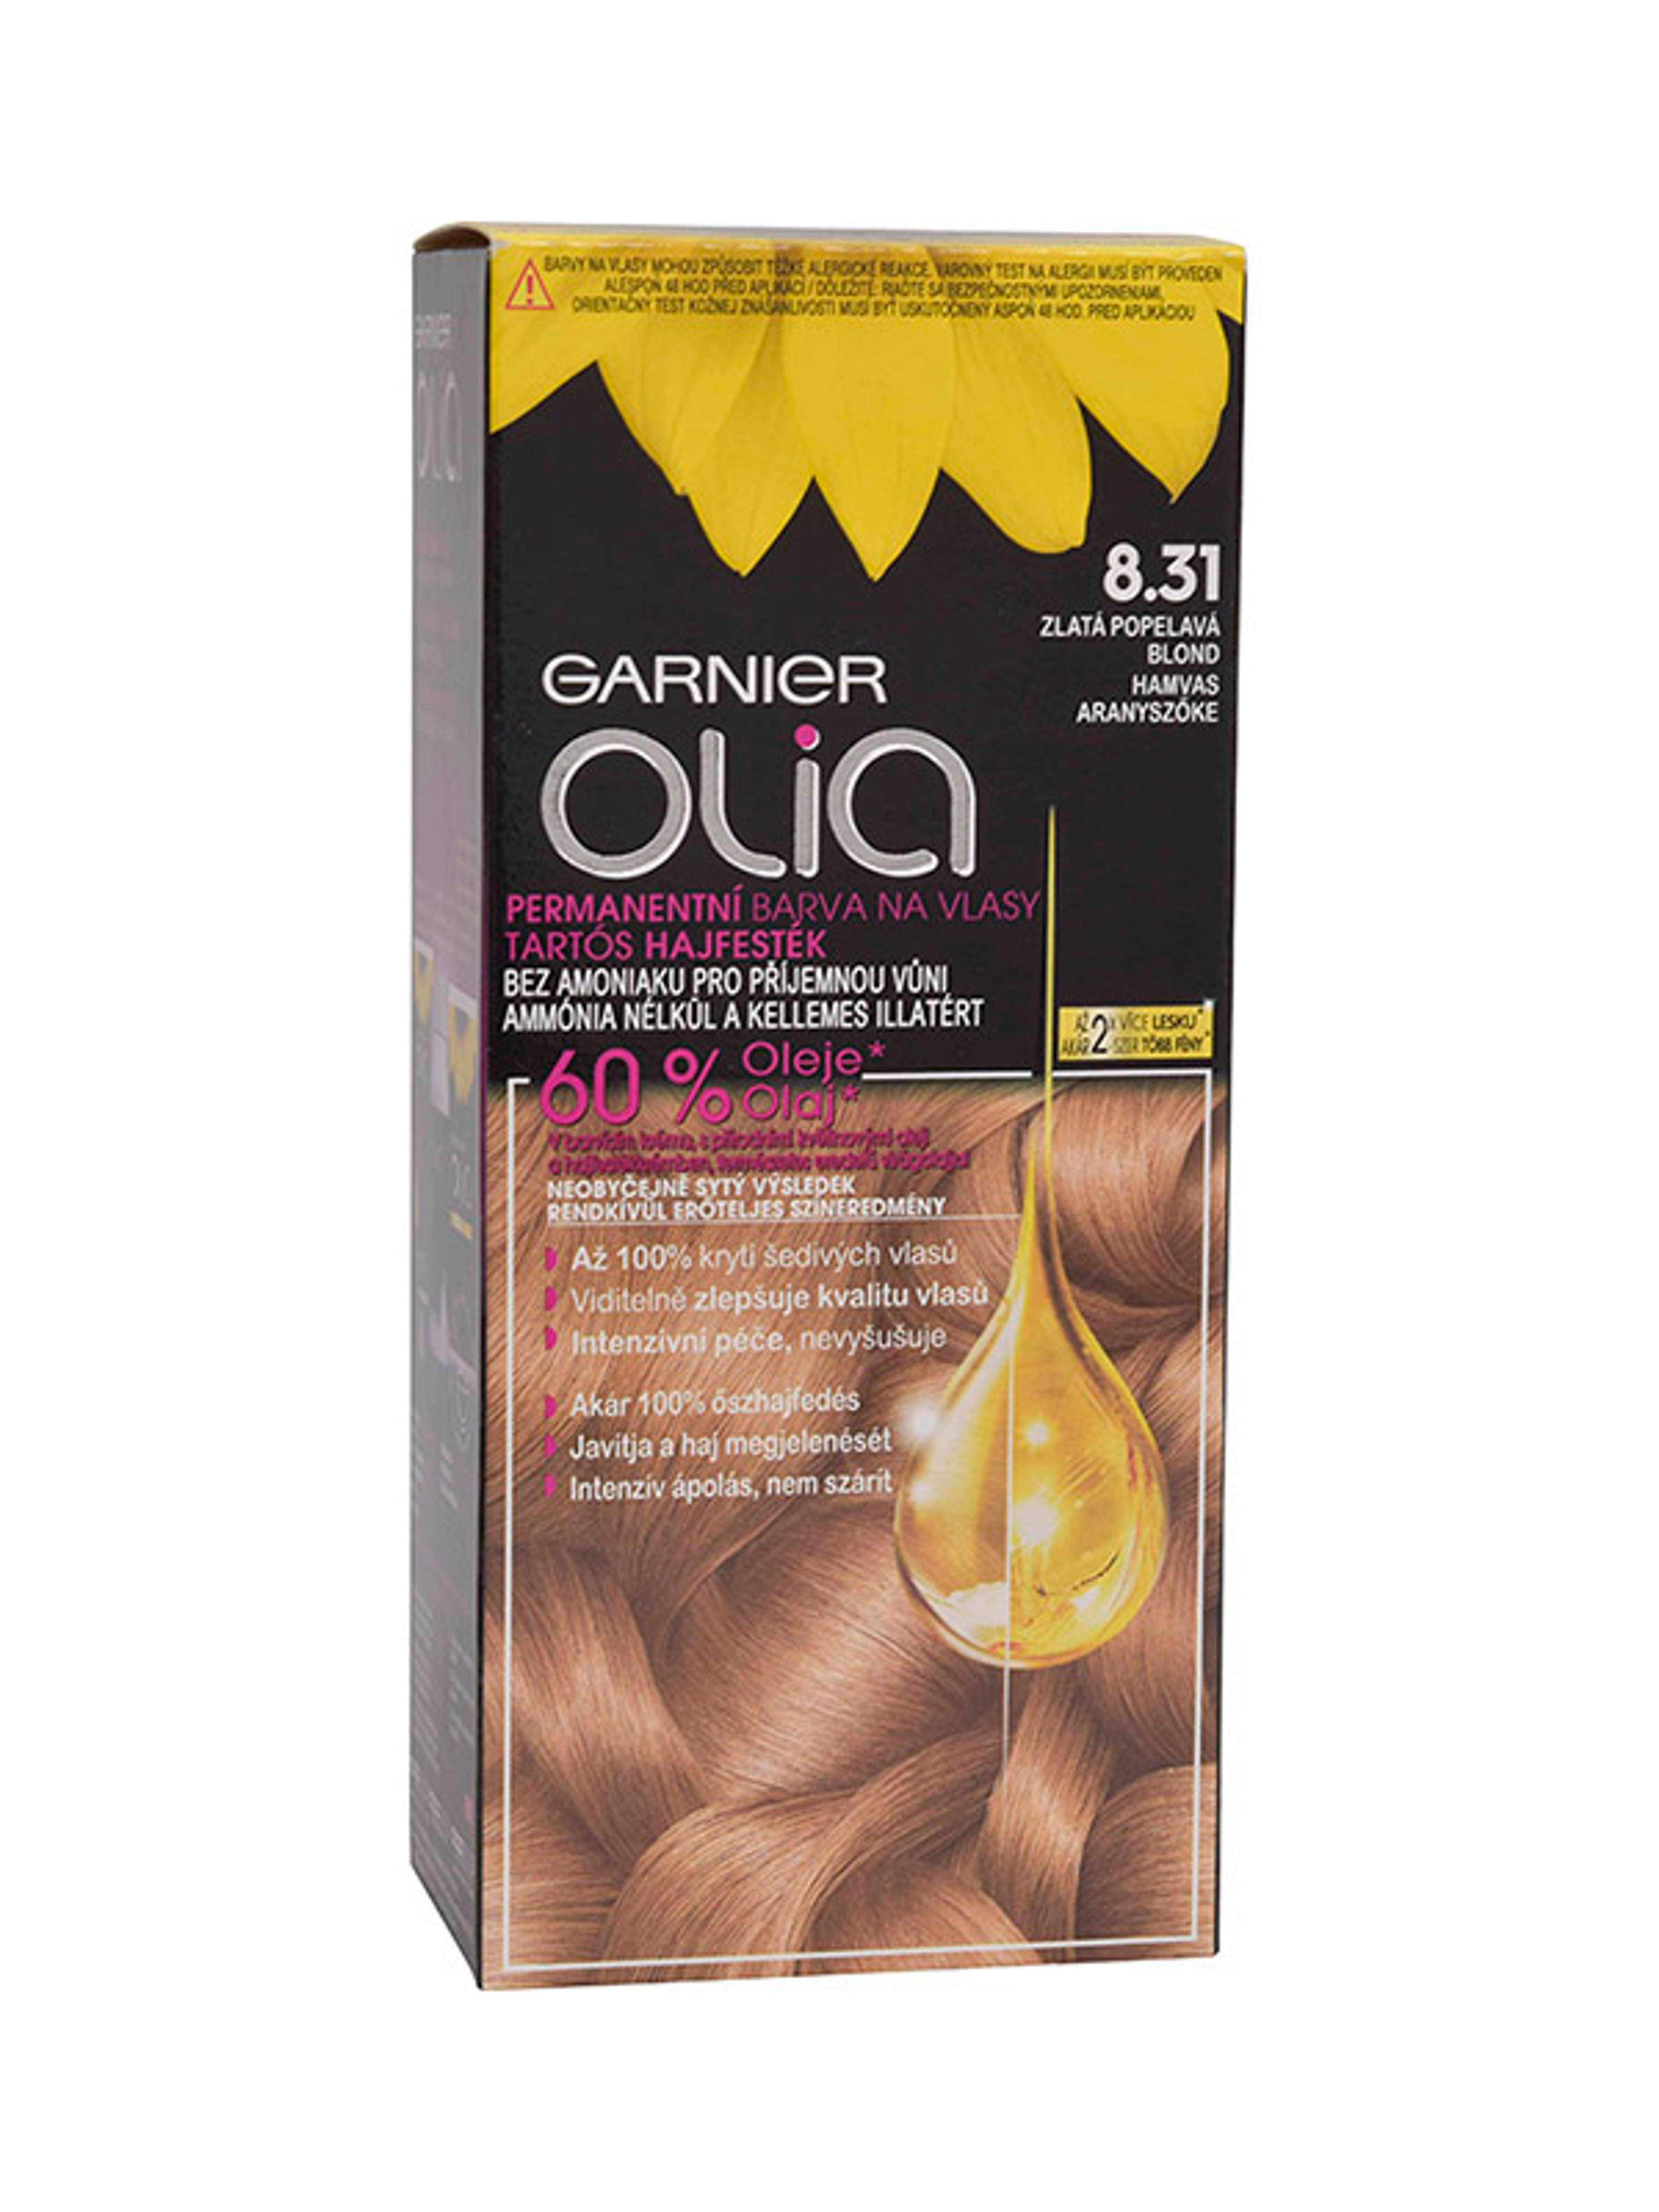 Garnier Olia tartós hajfesték 8.31 Hamvas aranyszőke - 1 db